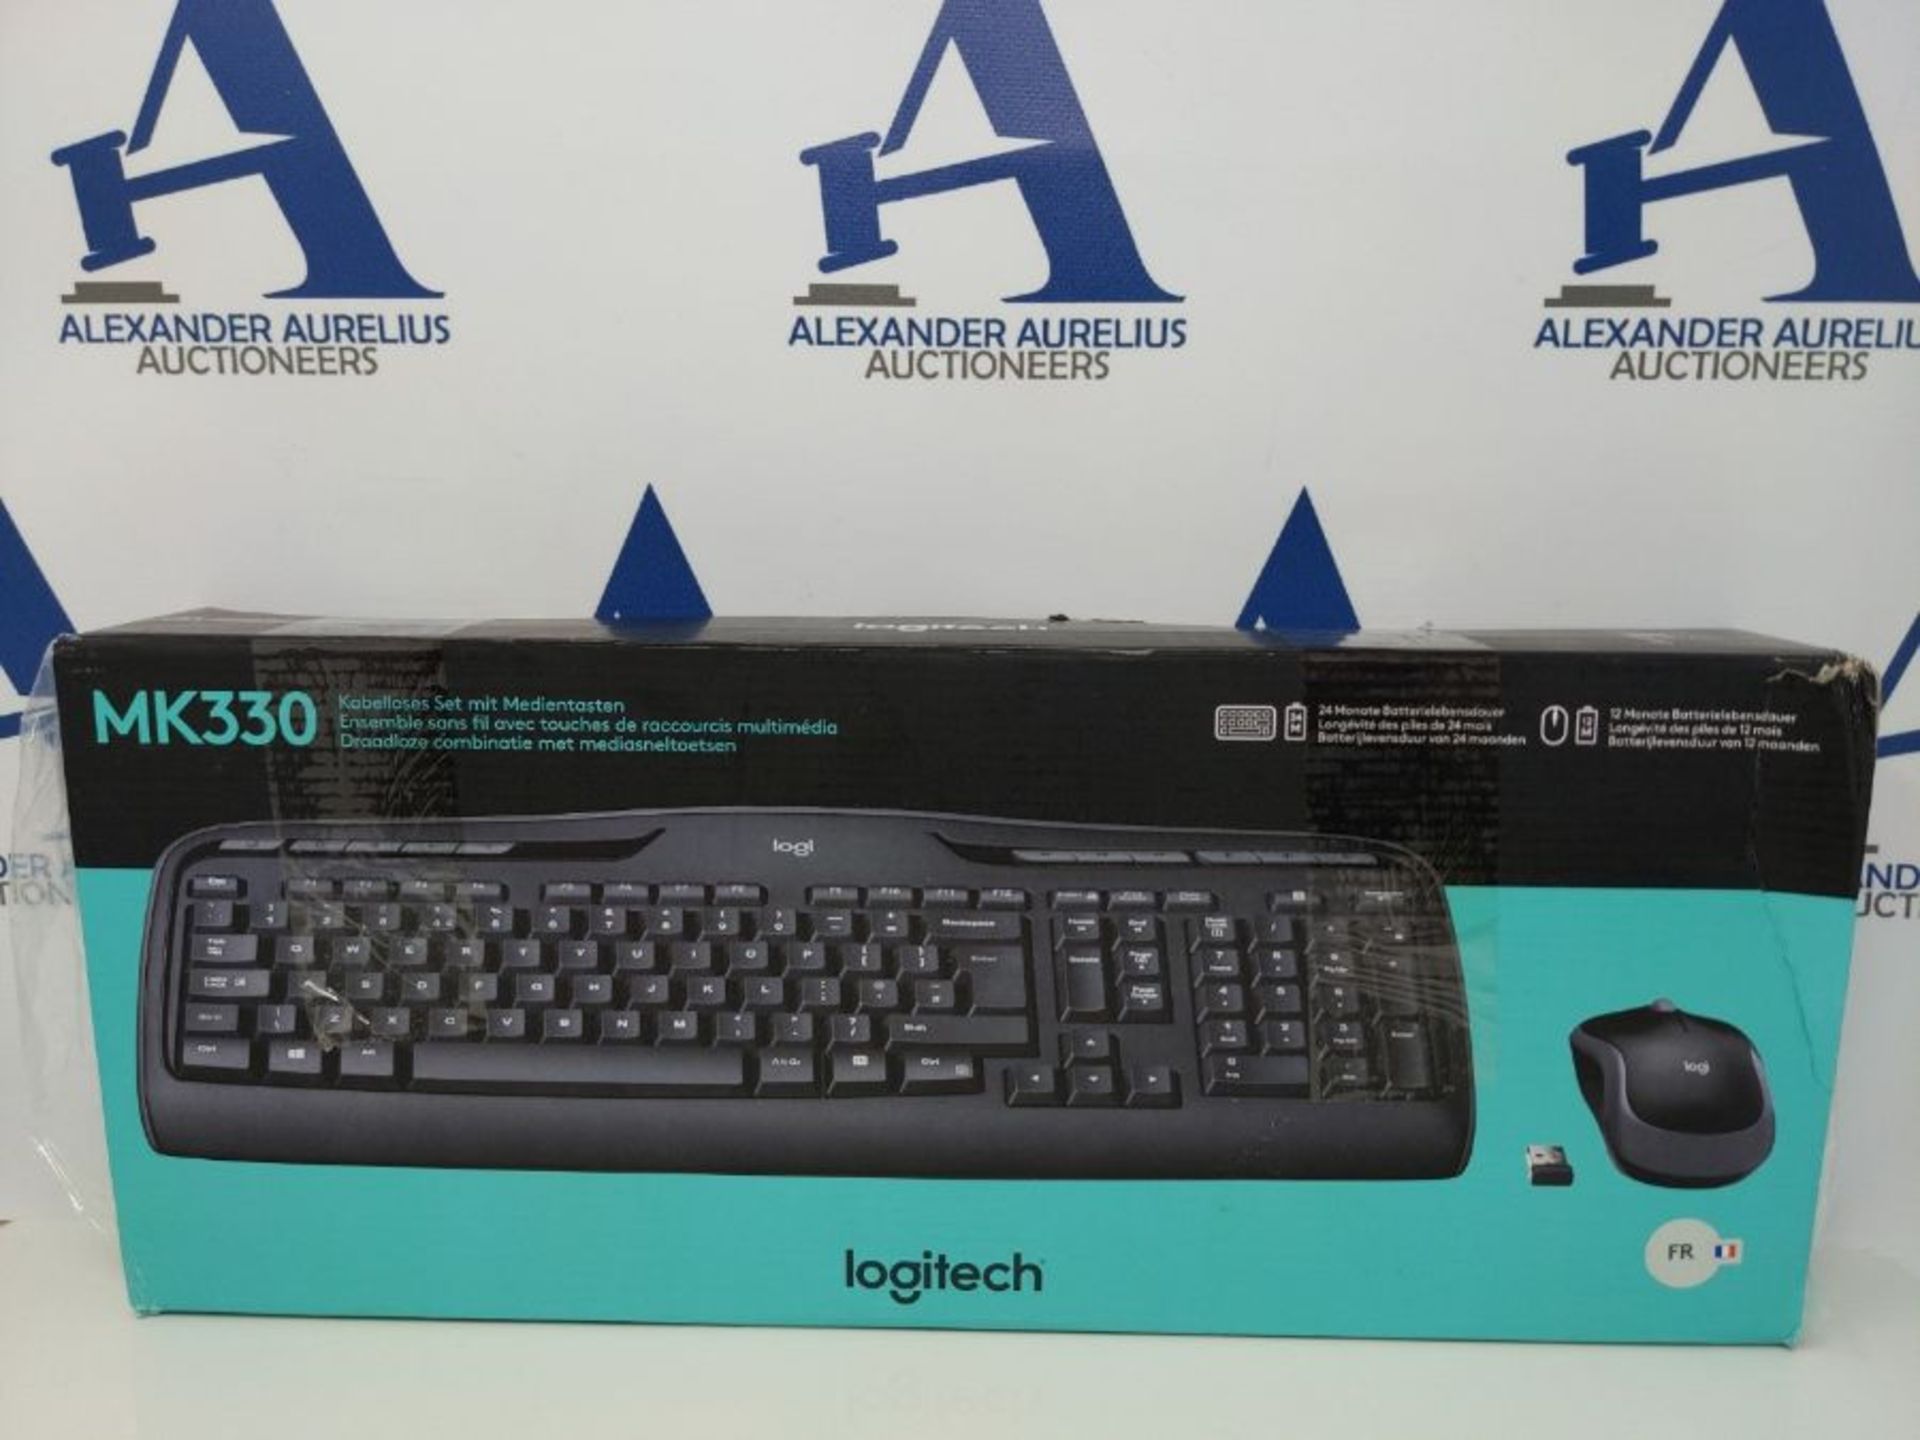 Logitech MK330 Wireless Keyboard and Mouse Combo, AZERTY French Layout - Black - Image 2 of 3